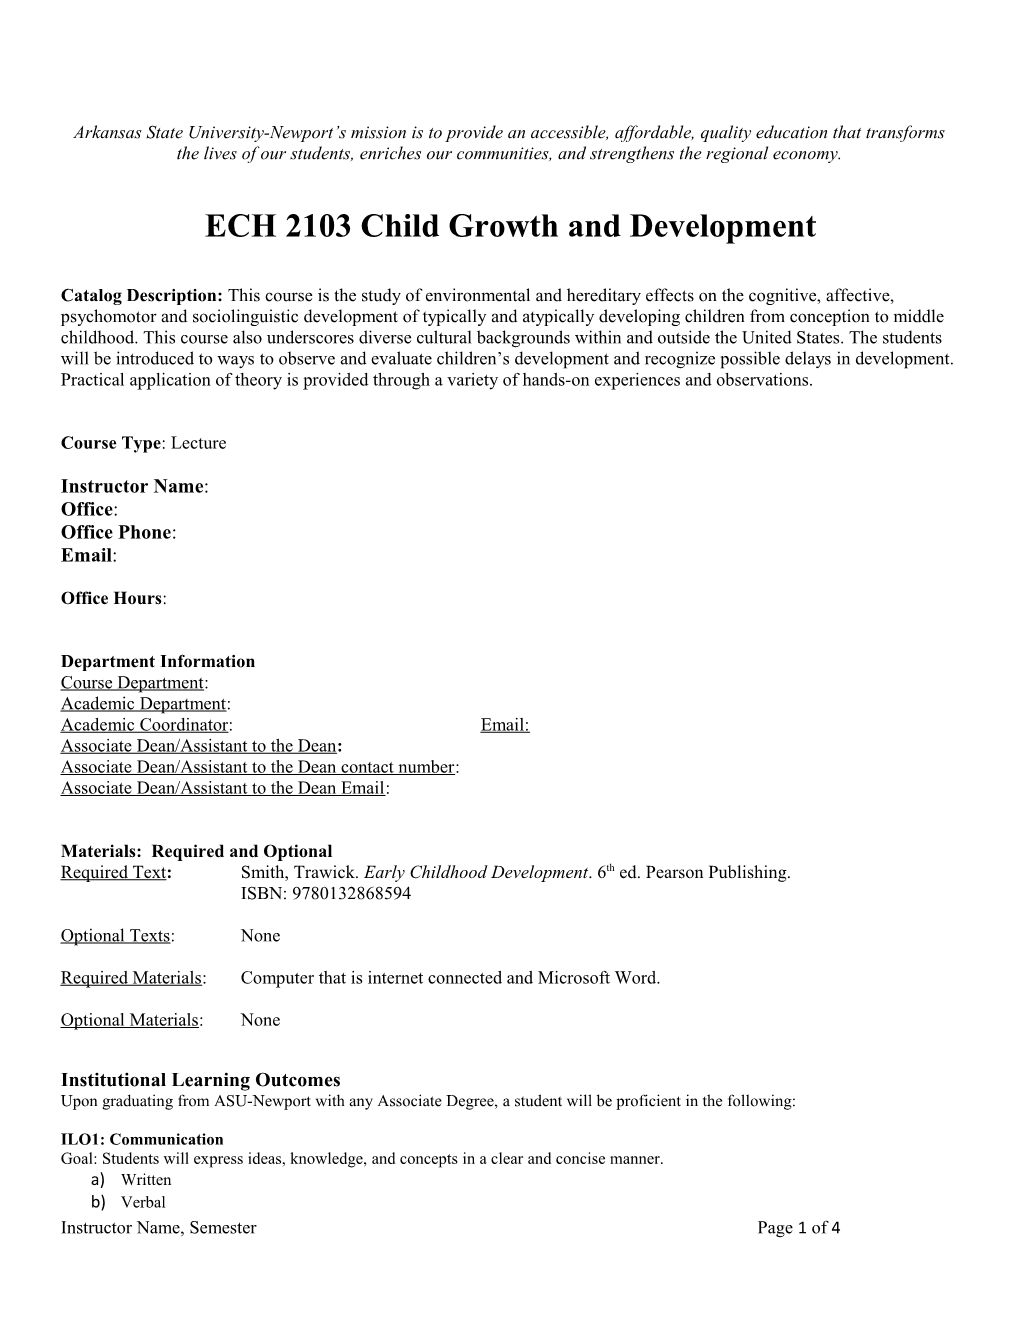 ECH 2103 Child Growth and Development